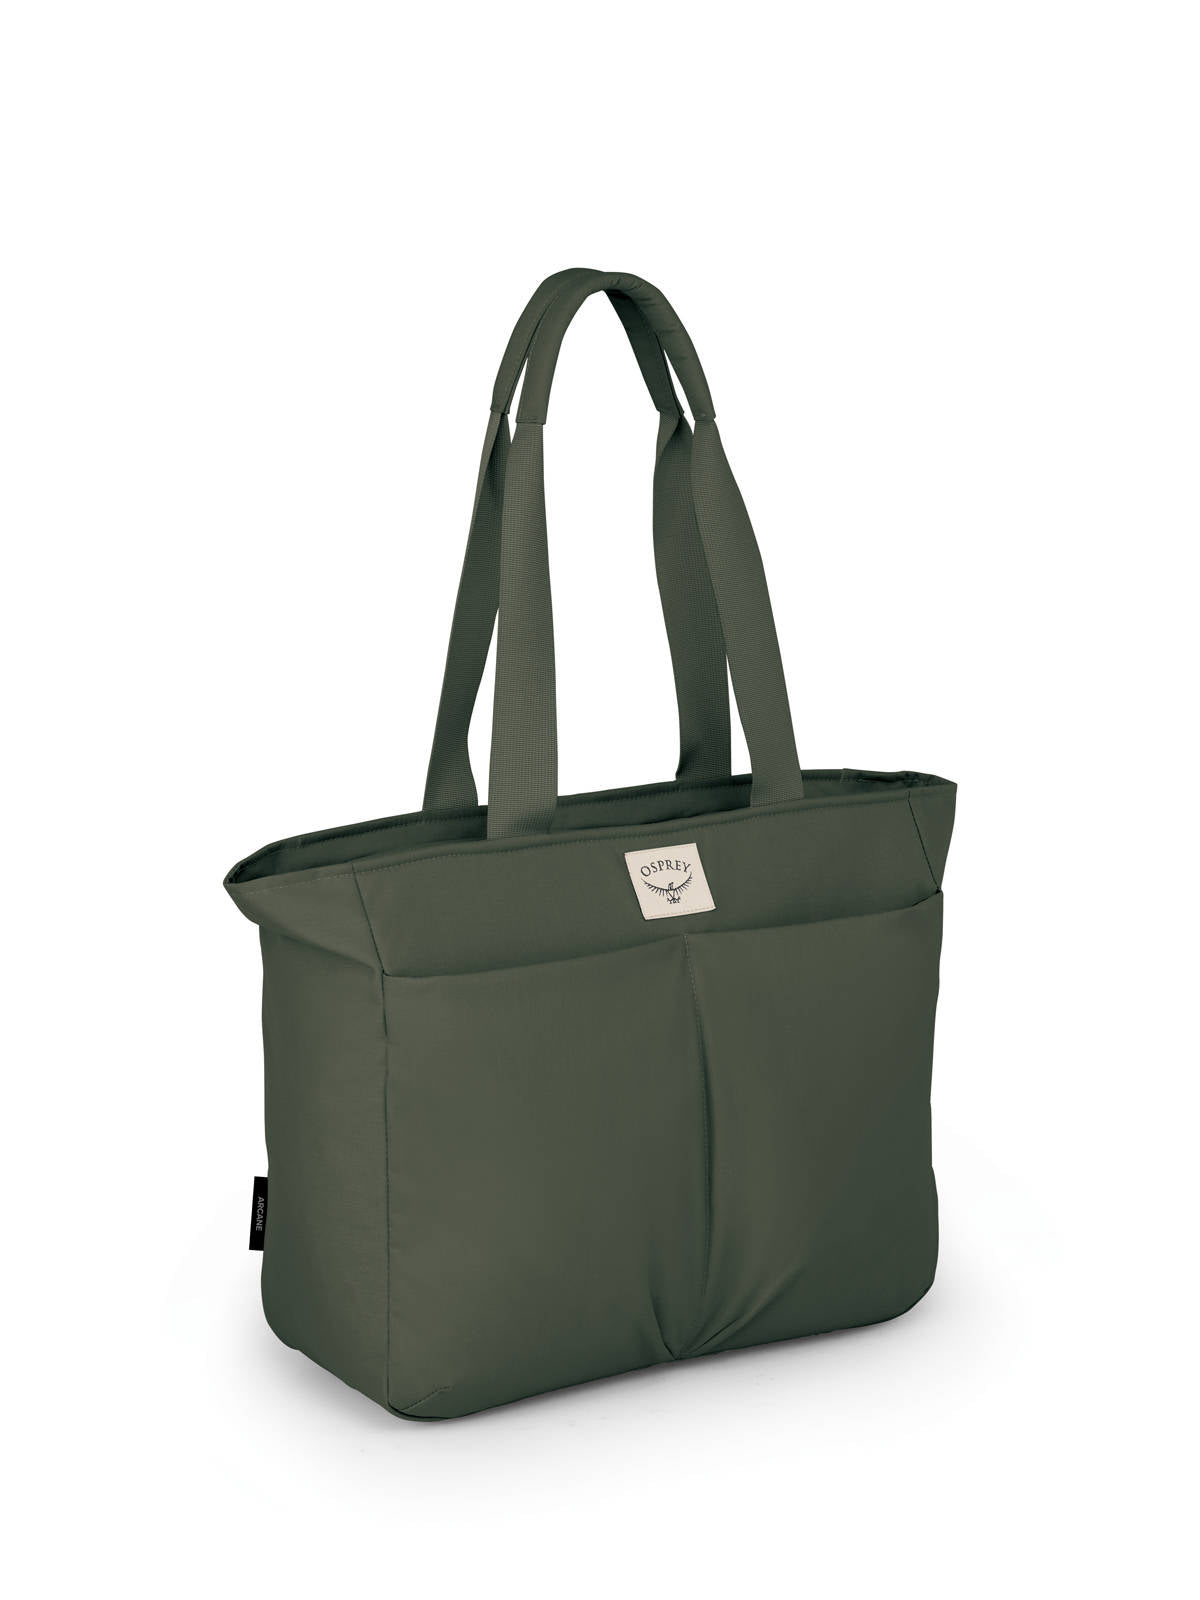 Arcane Tote Bag handlebag